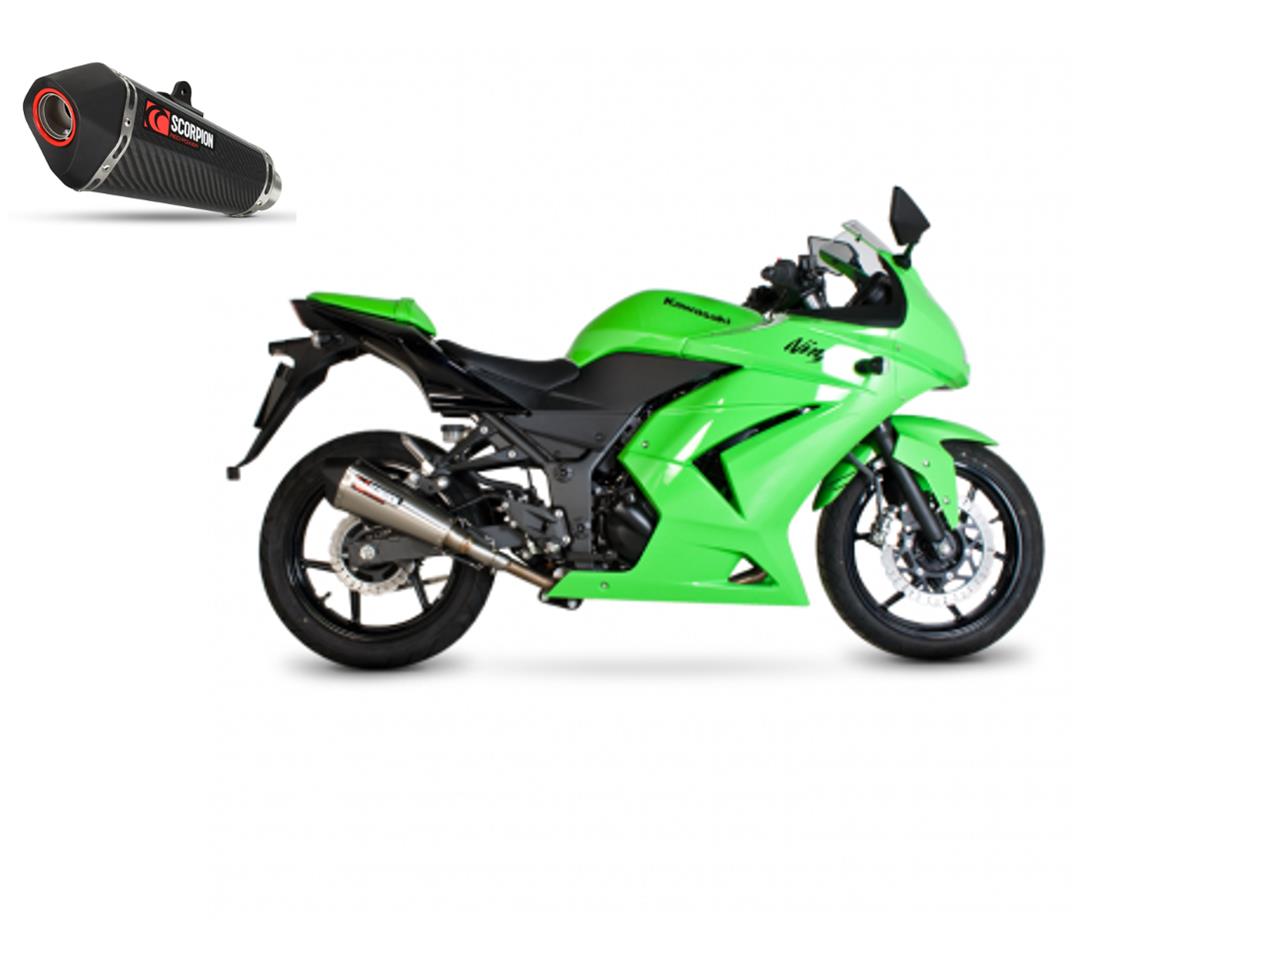 Silencieux d'échappement Moto Scorpion Serket Carbone pour Kawasaki Ninja 250 (08-12)